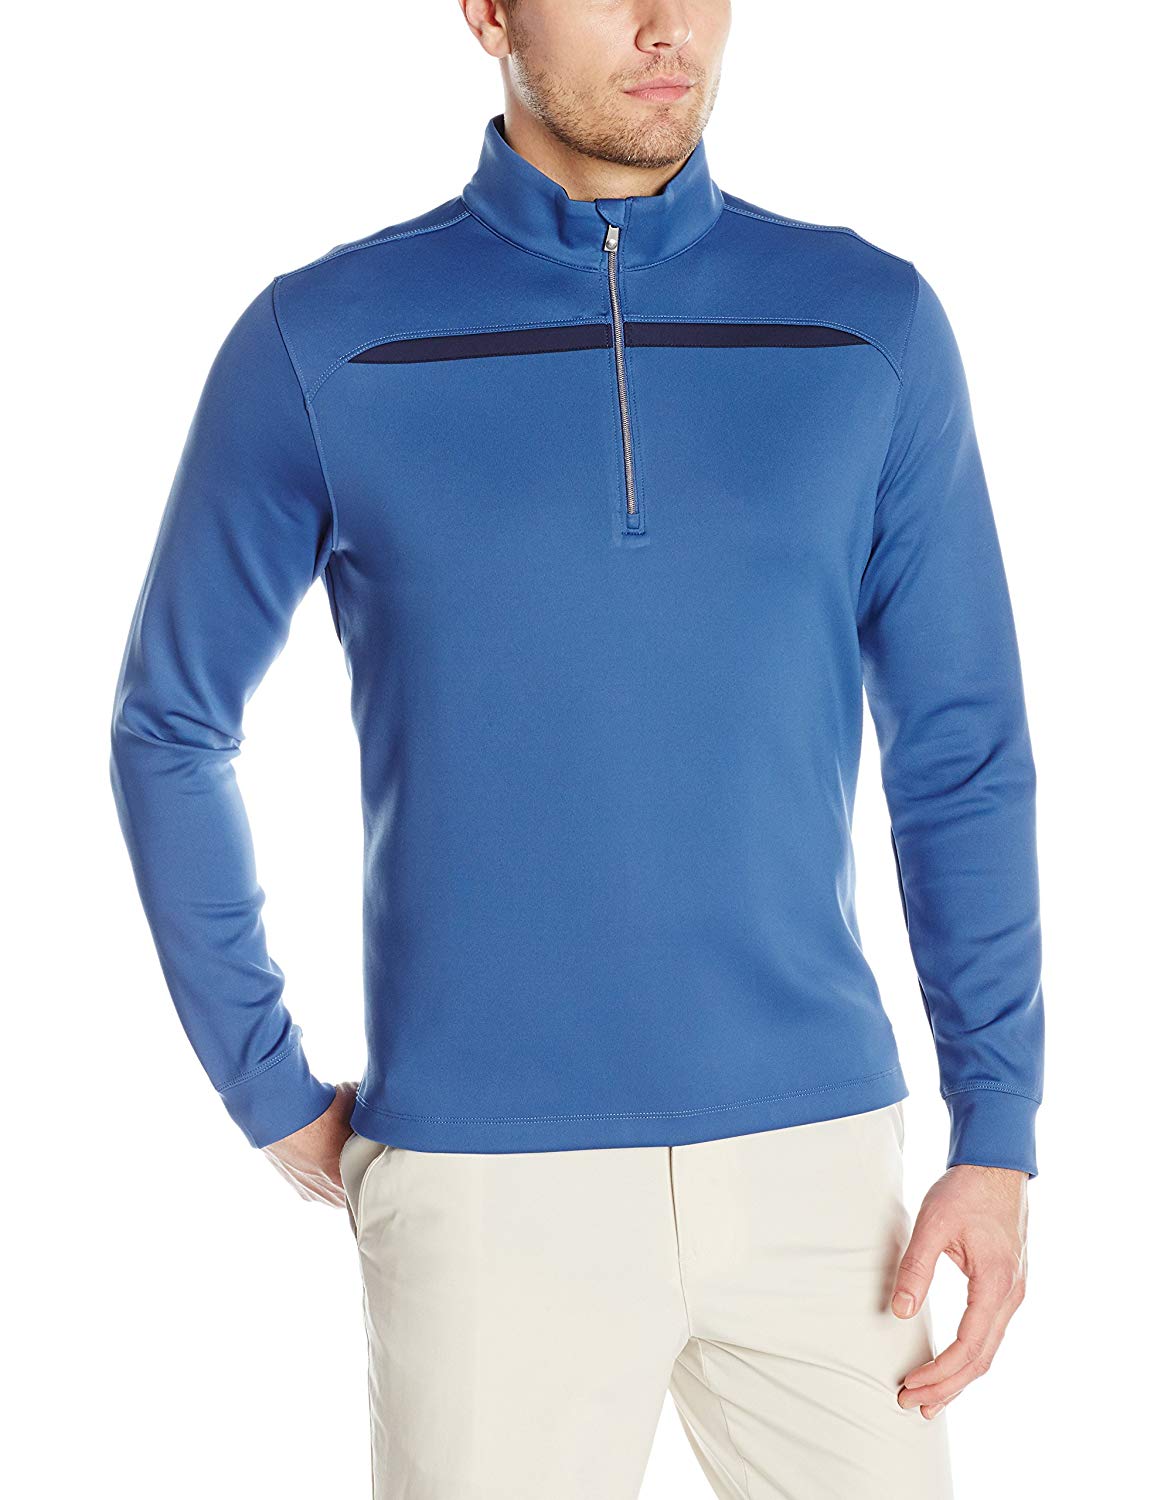 Greg Norman Mens Fashion Pullover Golf Tops